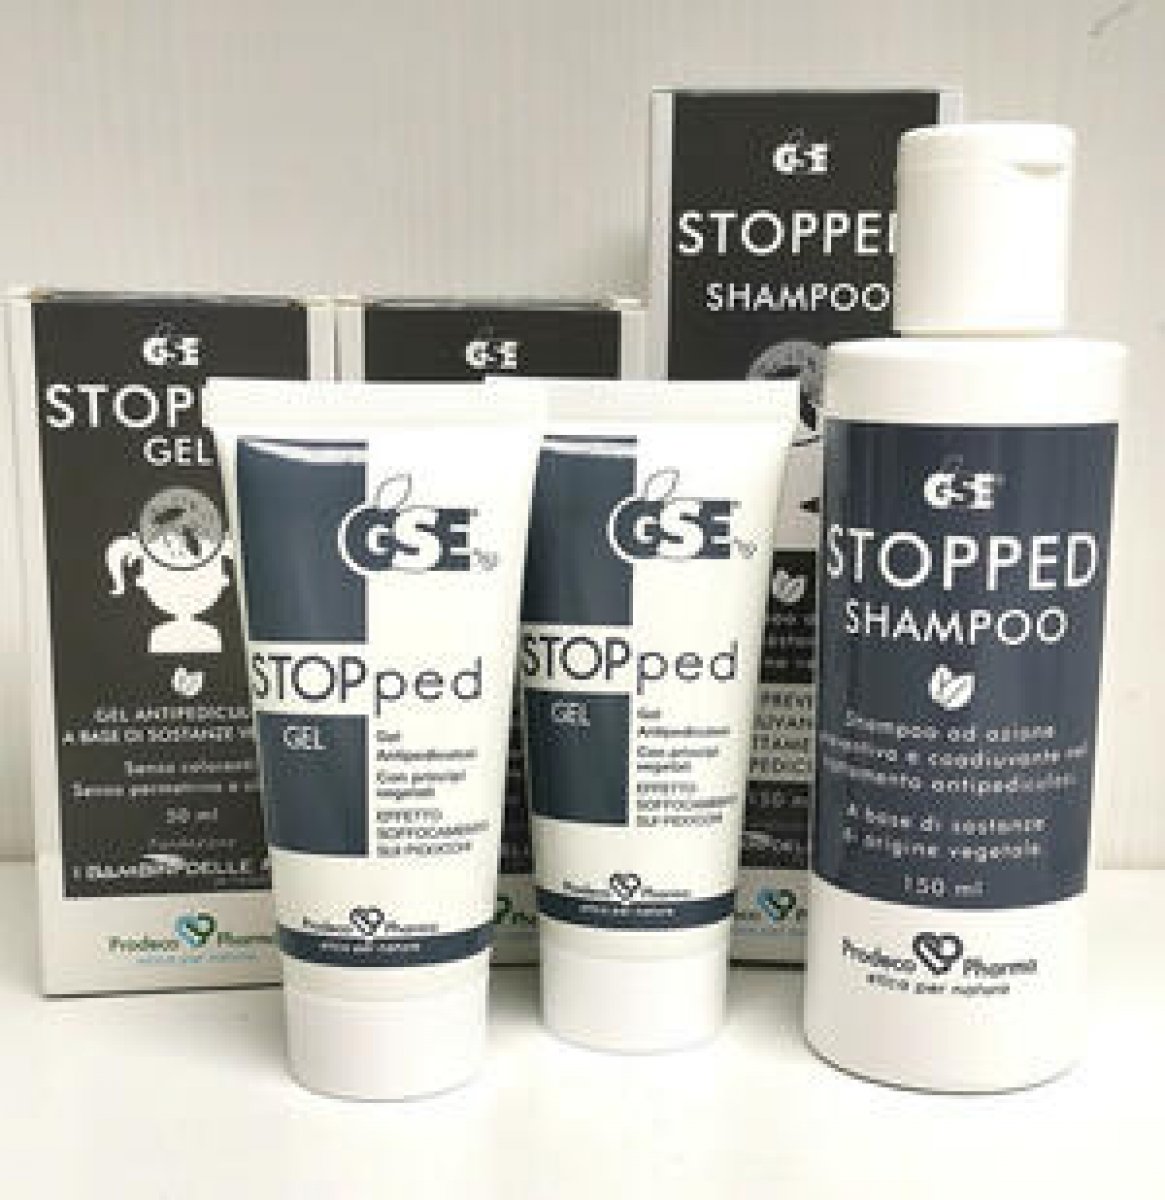 GSE STOPPED KIT TRATTAMENTO 2 Gel + 1 Shampool ►OMAGGIO◄ GSE STOPped KIT trattamento 2 Gel 50 ml + 1 Shampoo 150 ml ►OMAGGIO◄